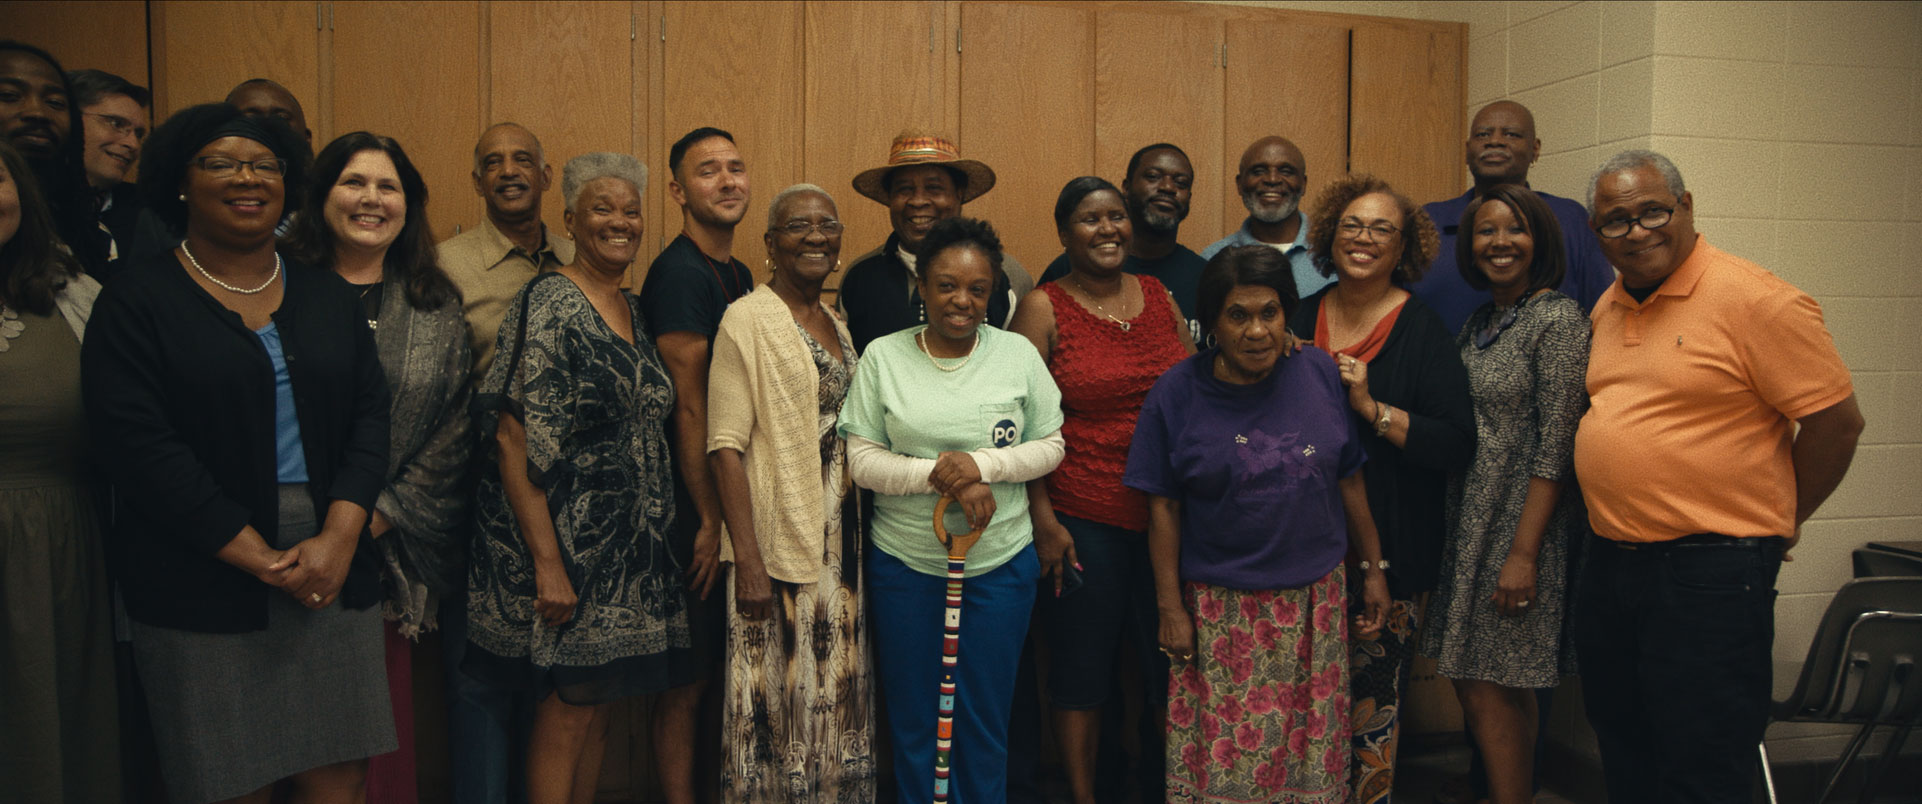 Clotilda descendants and community activists in a still from 'Descendant.' (Courtesy of Netflix)